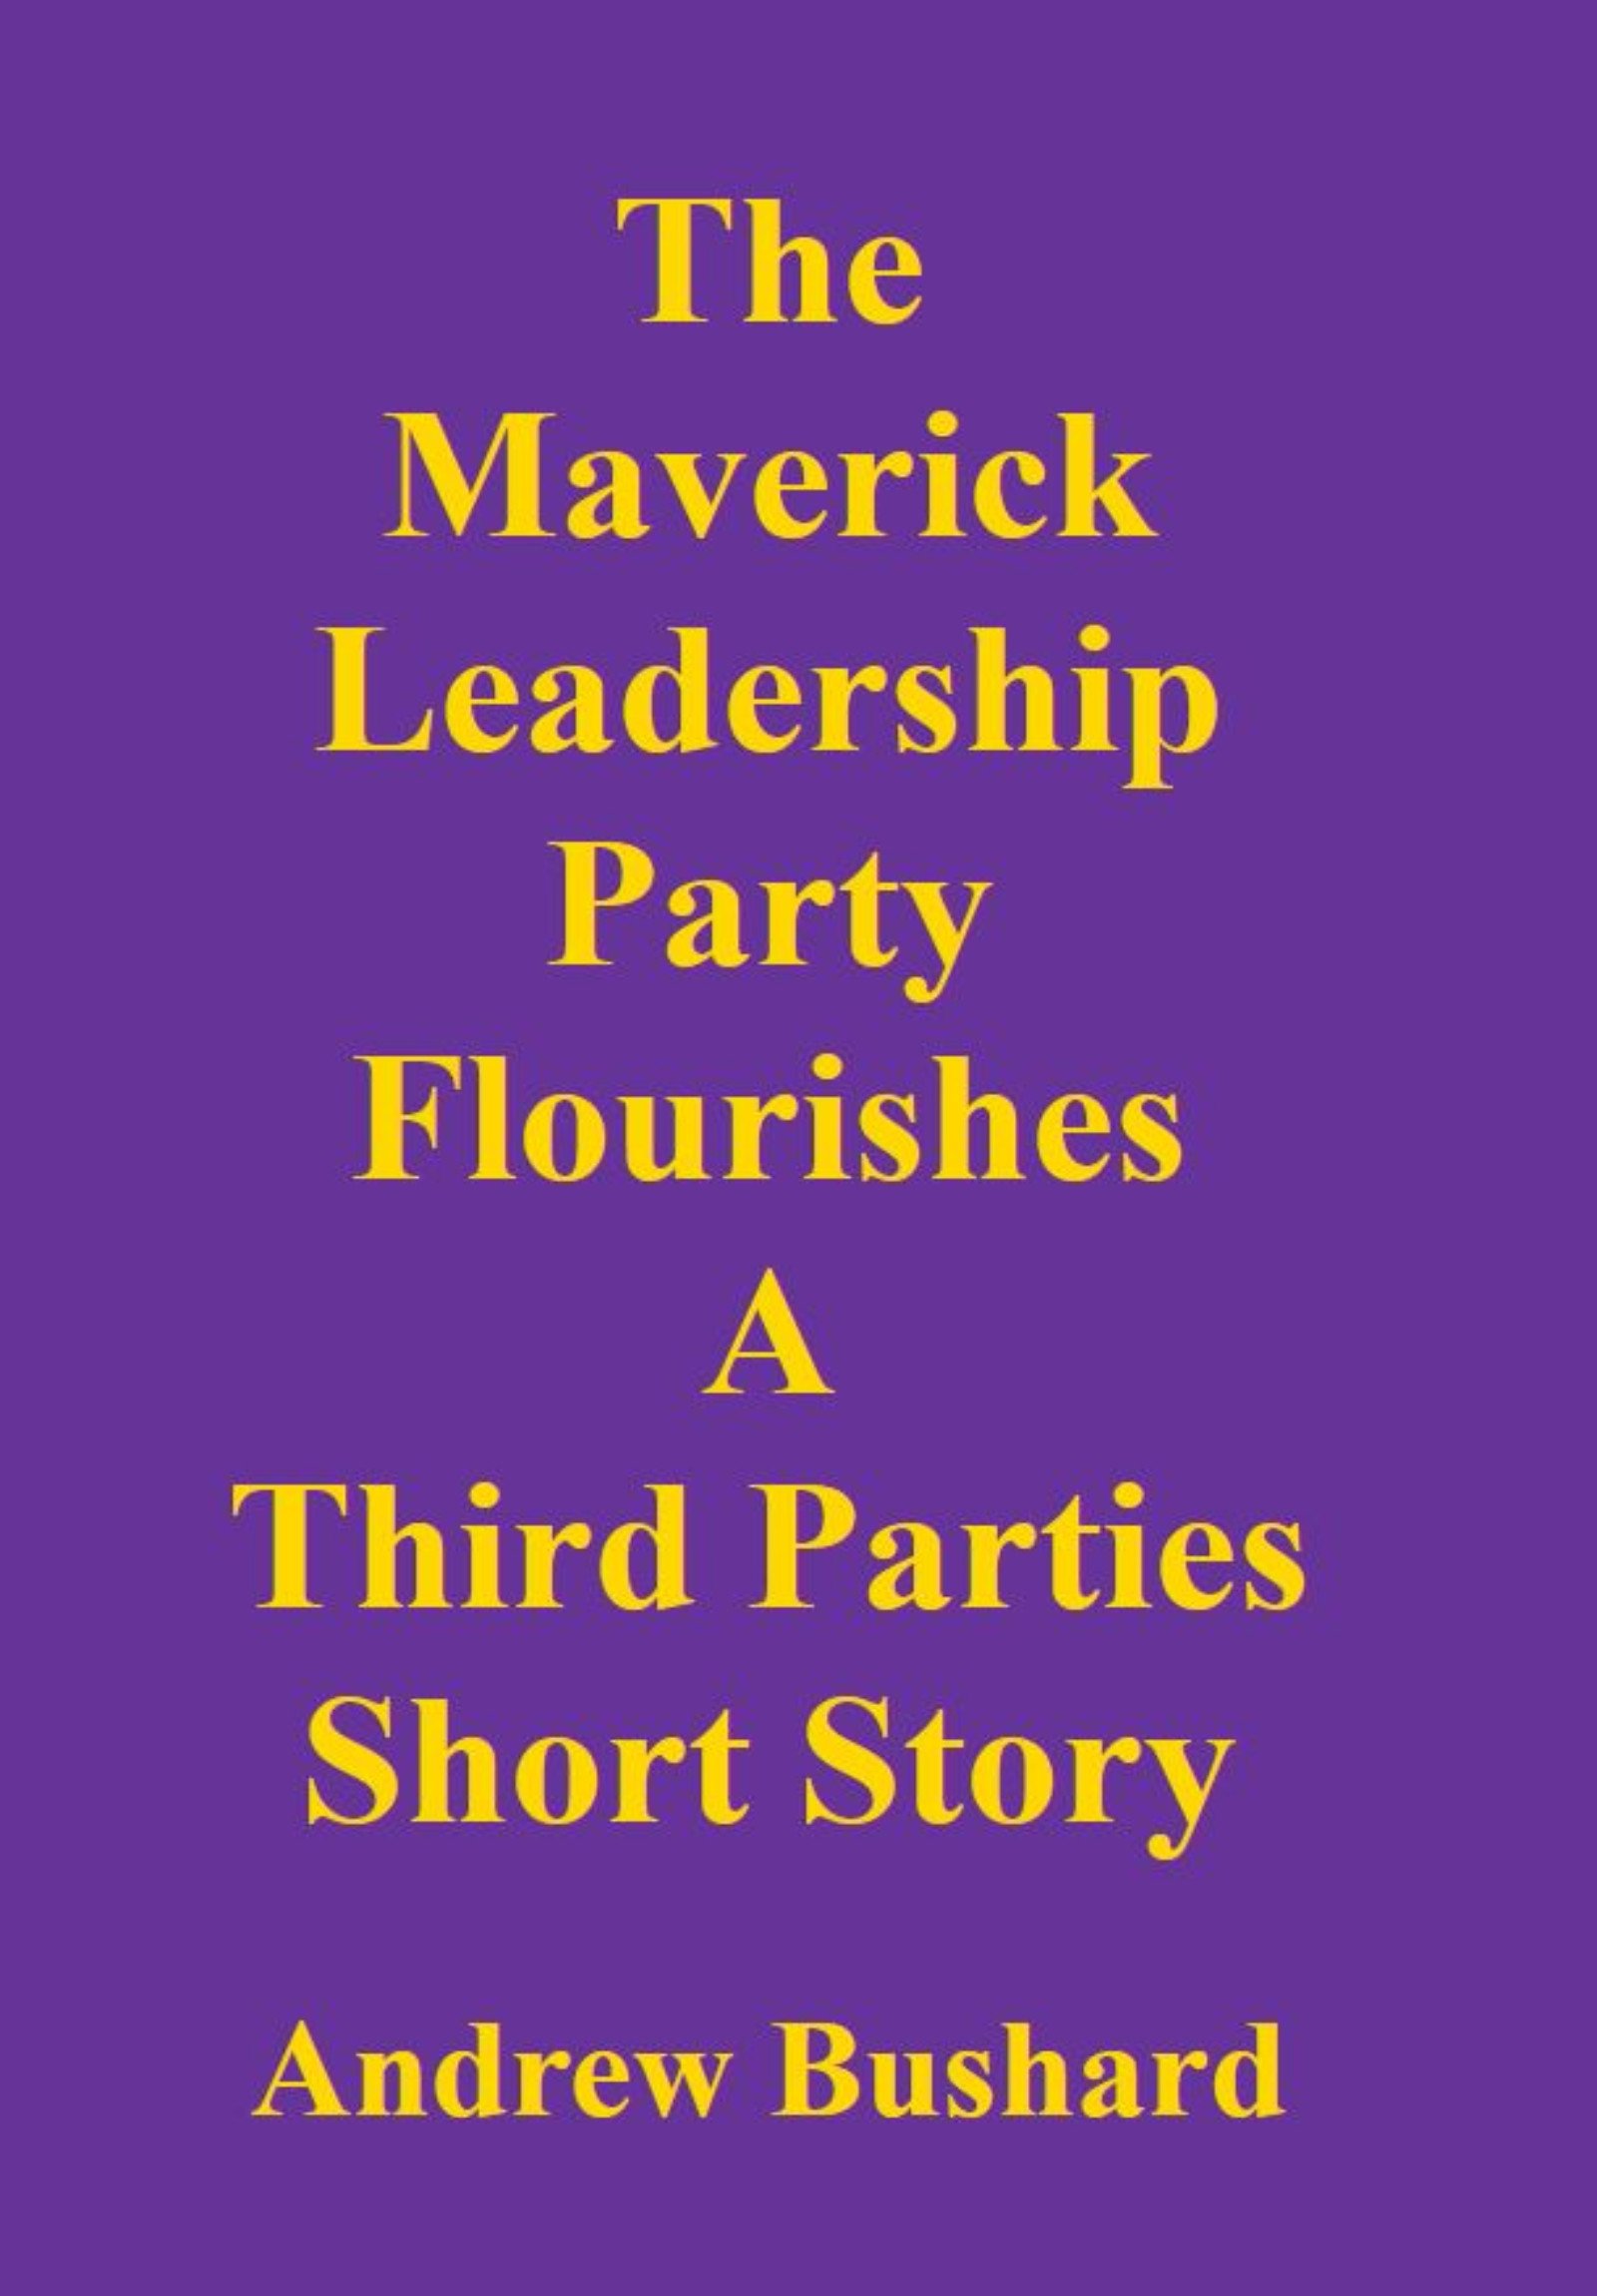 The Maverick Leadership Party Flourishes